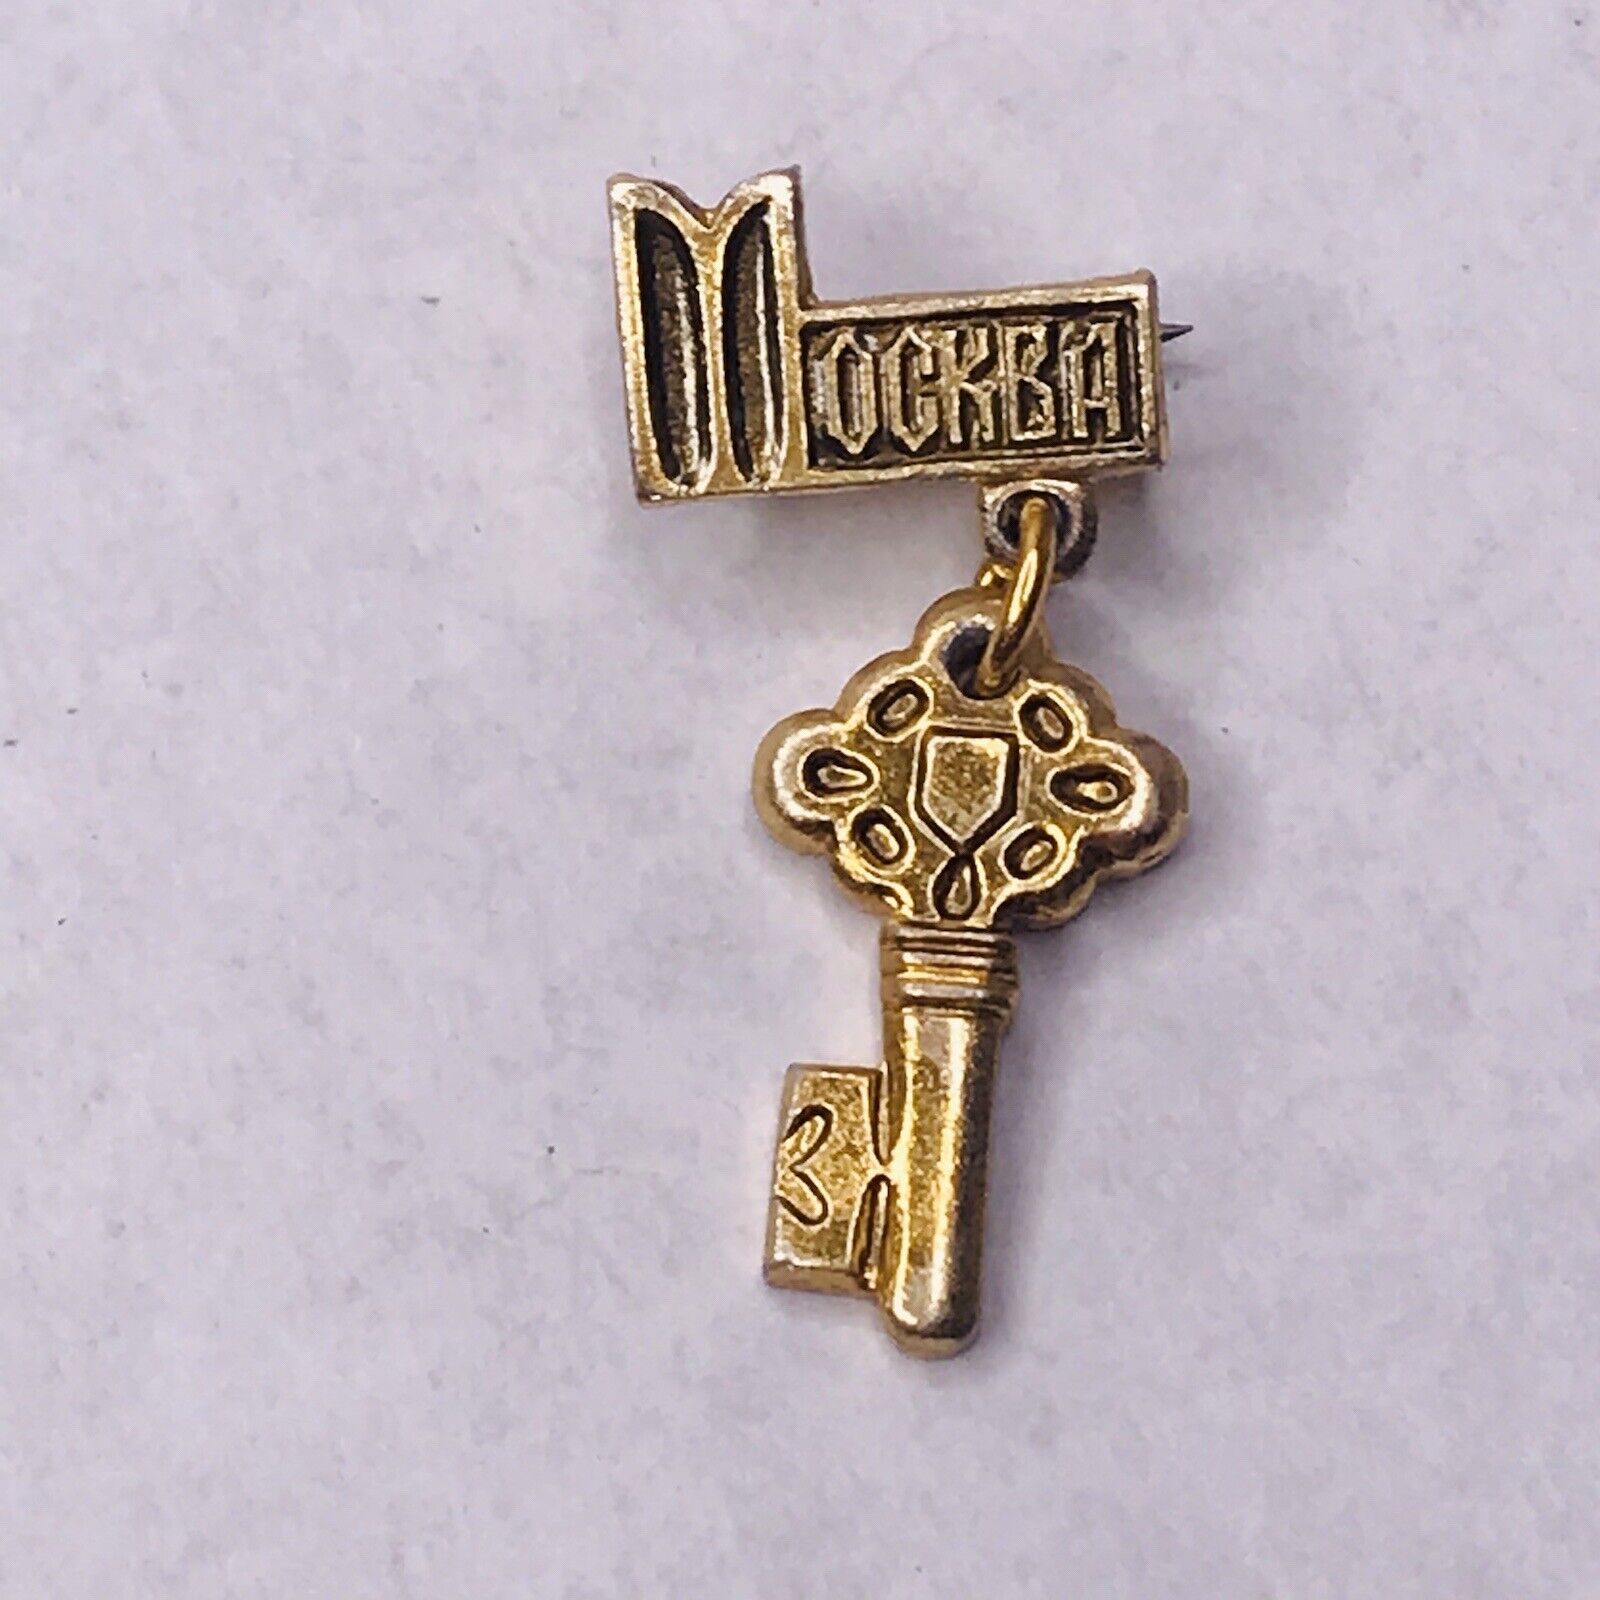 Moscow Russia Mockba Key Dangle Gold Tone Metal Lapel Pin Pinback Vintage